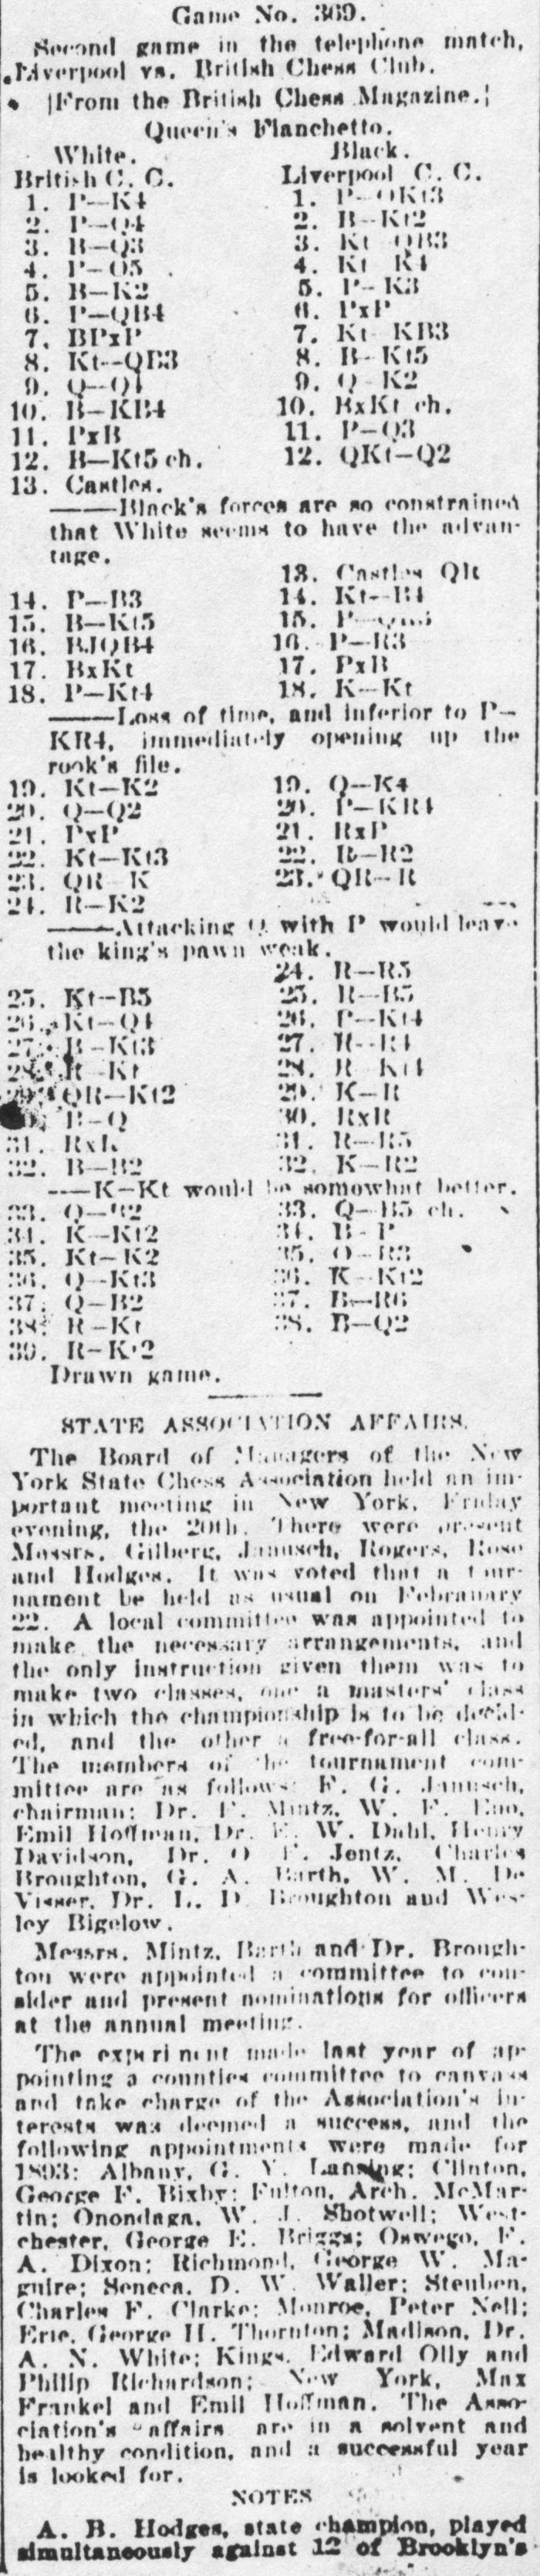 1893.01.28-02 Albany Evening Journal.jpg